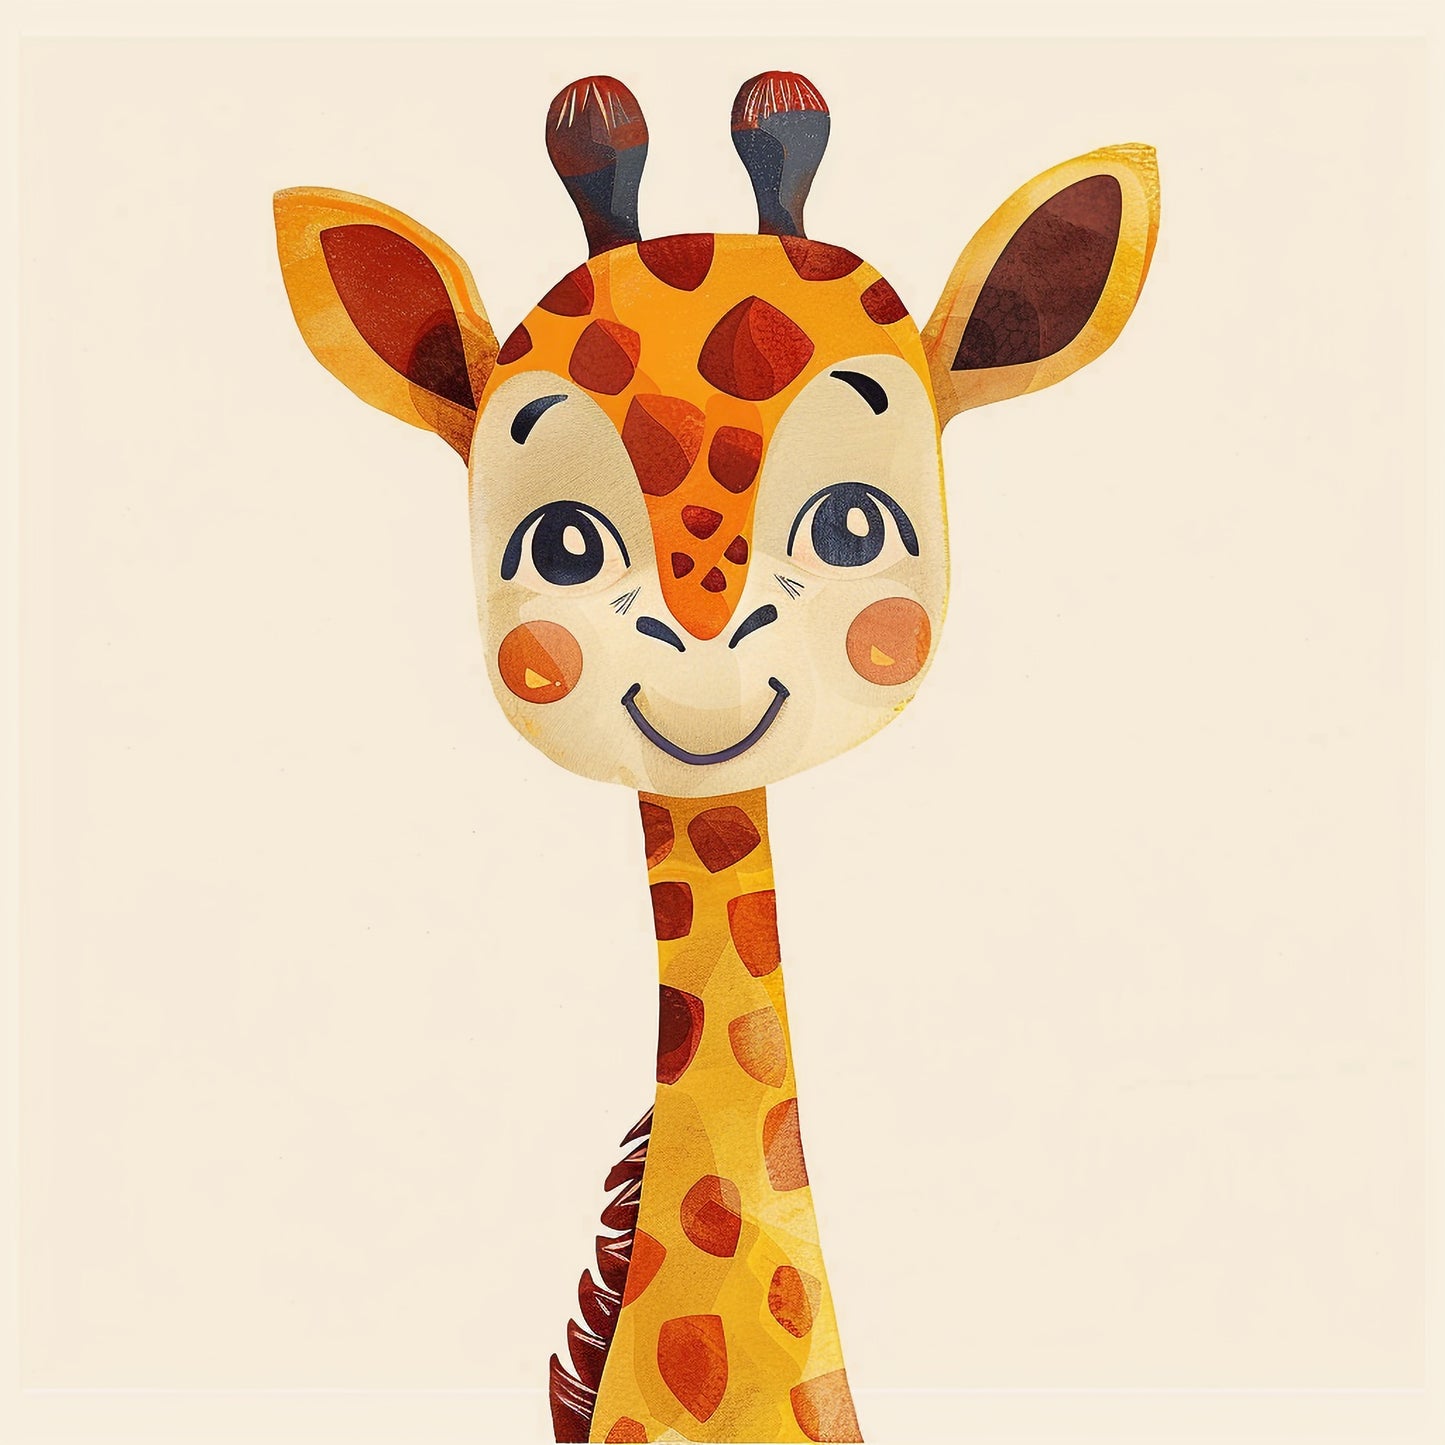 Cute Baby Giraffe Cartoon Illustration on White Background